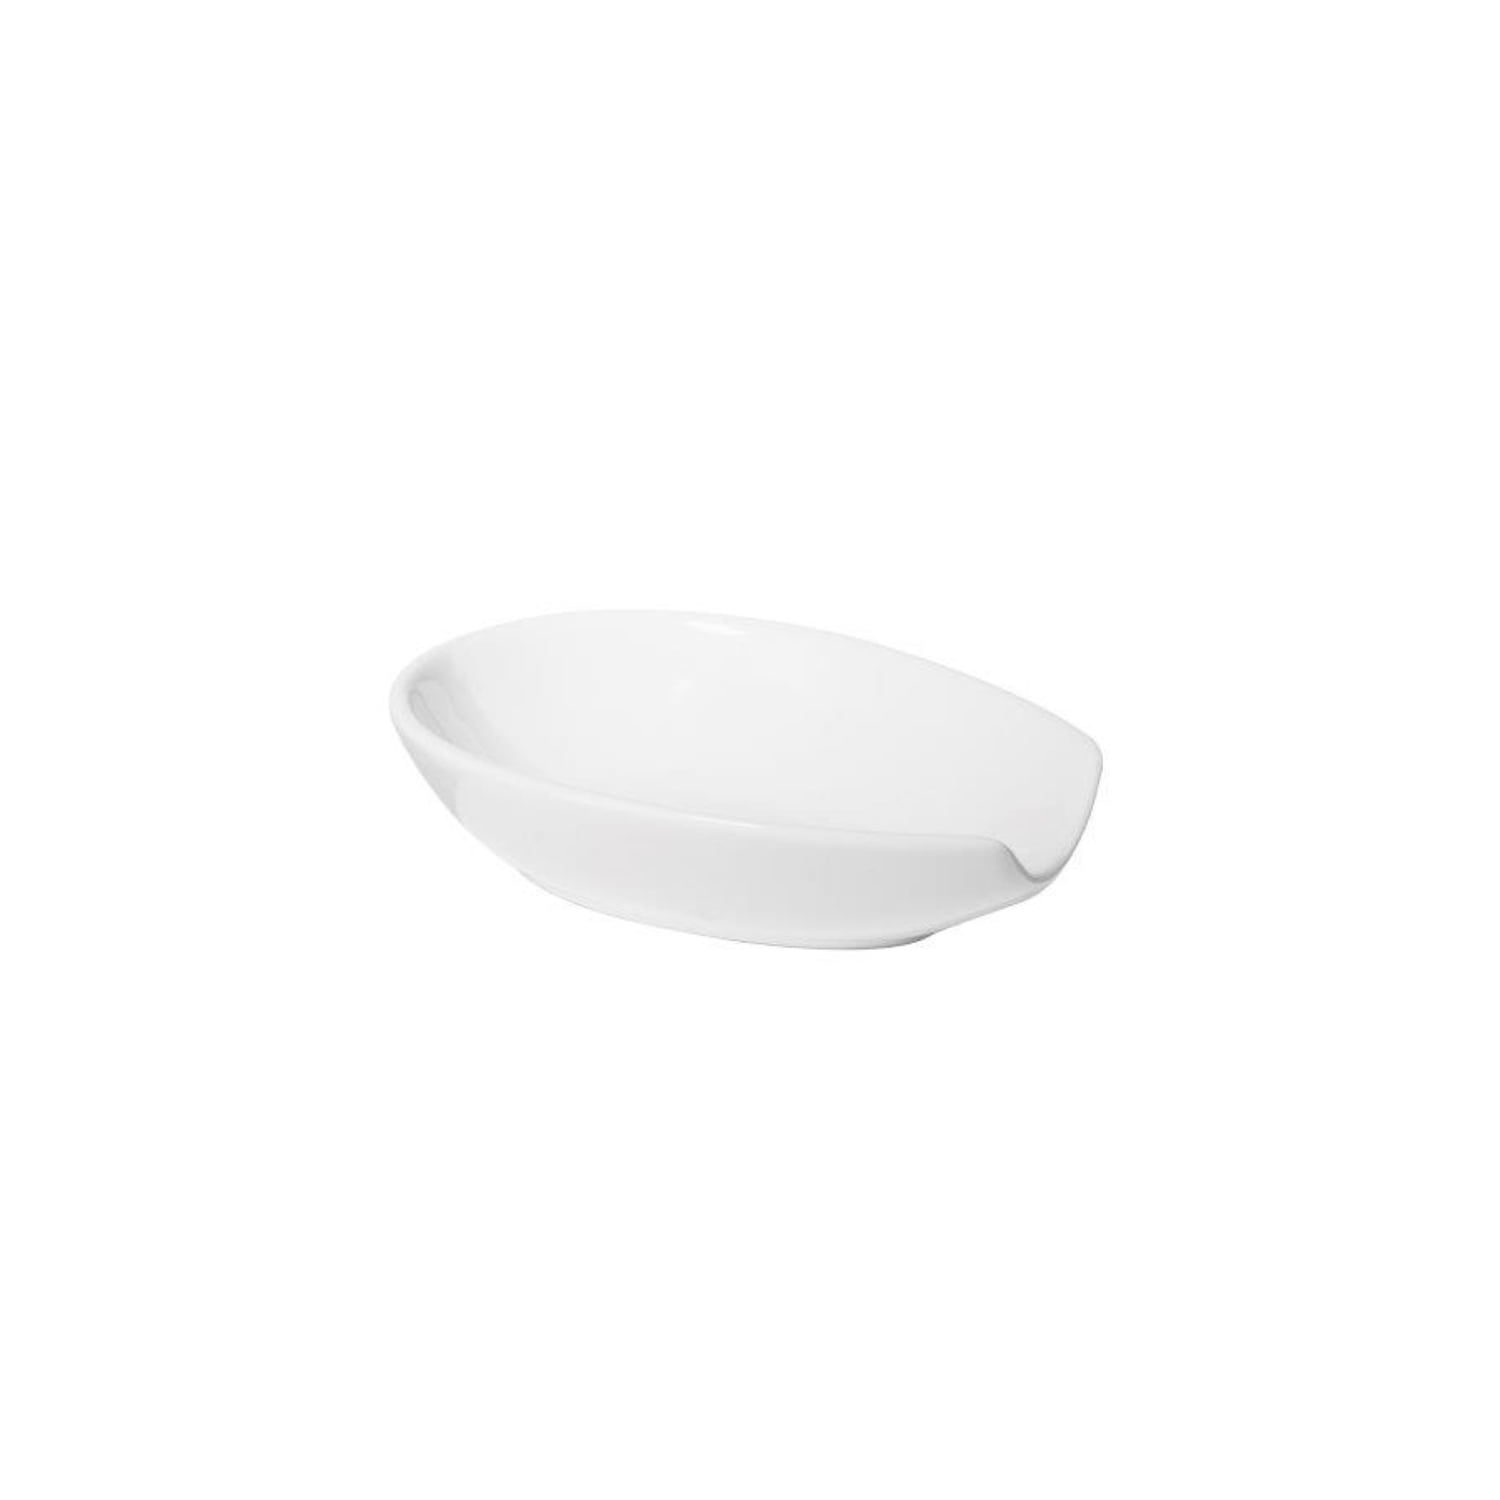 White by Oggi Oggi 5429.1 Ceramic Spoon Rest 